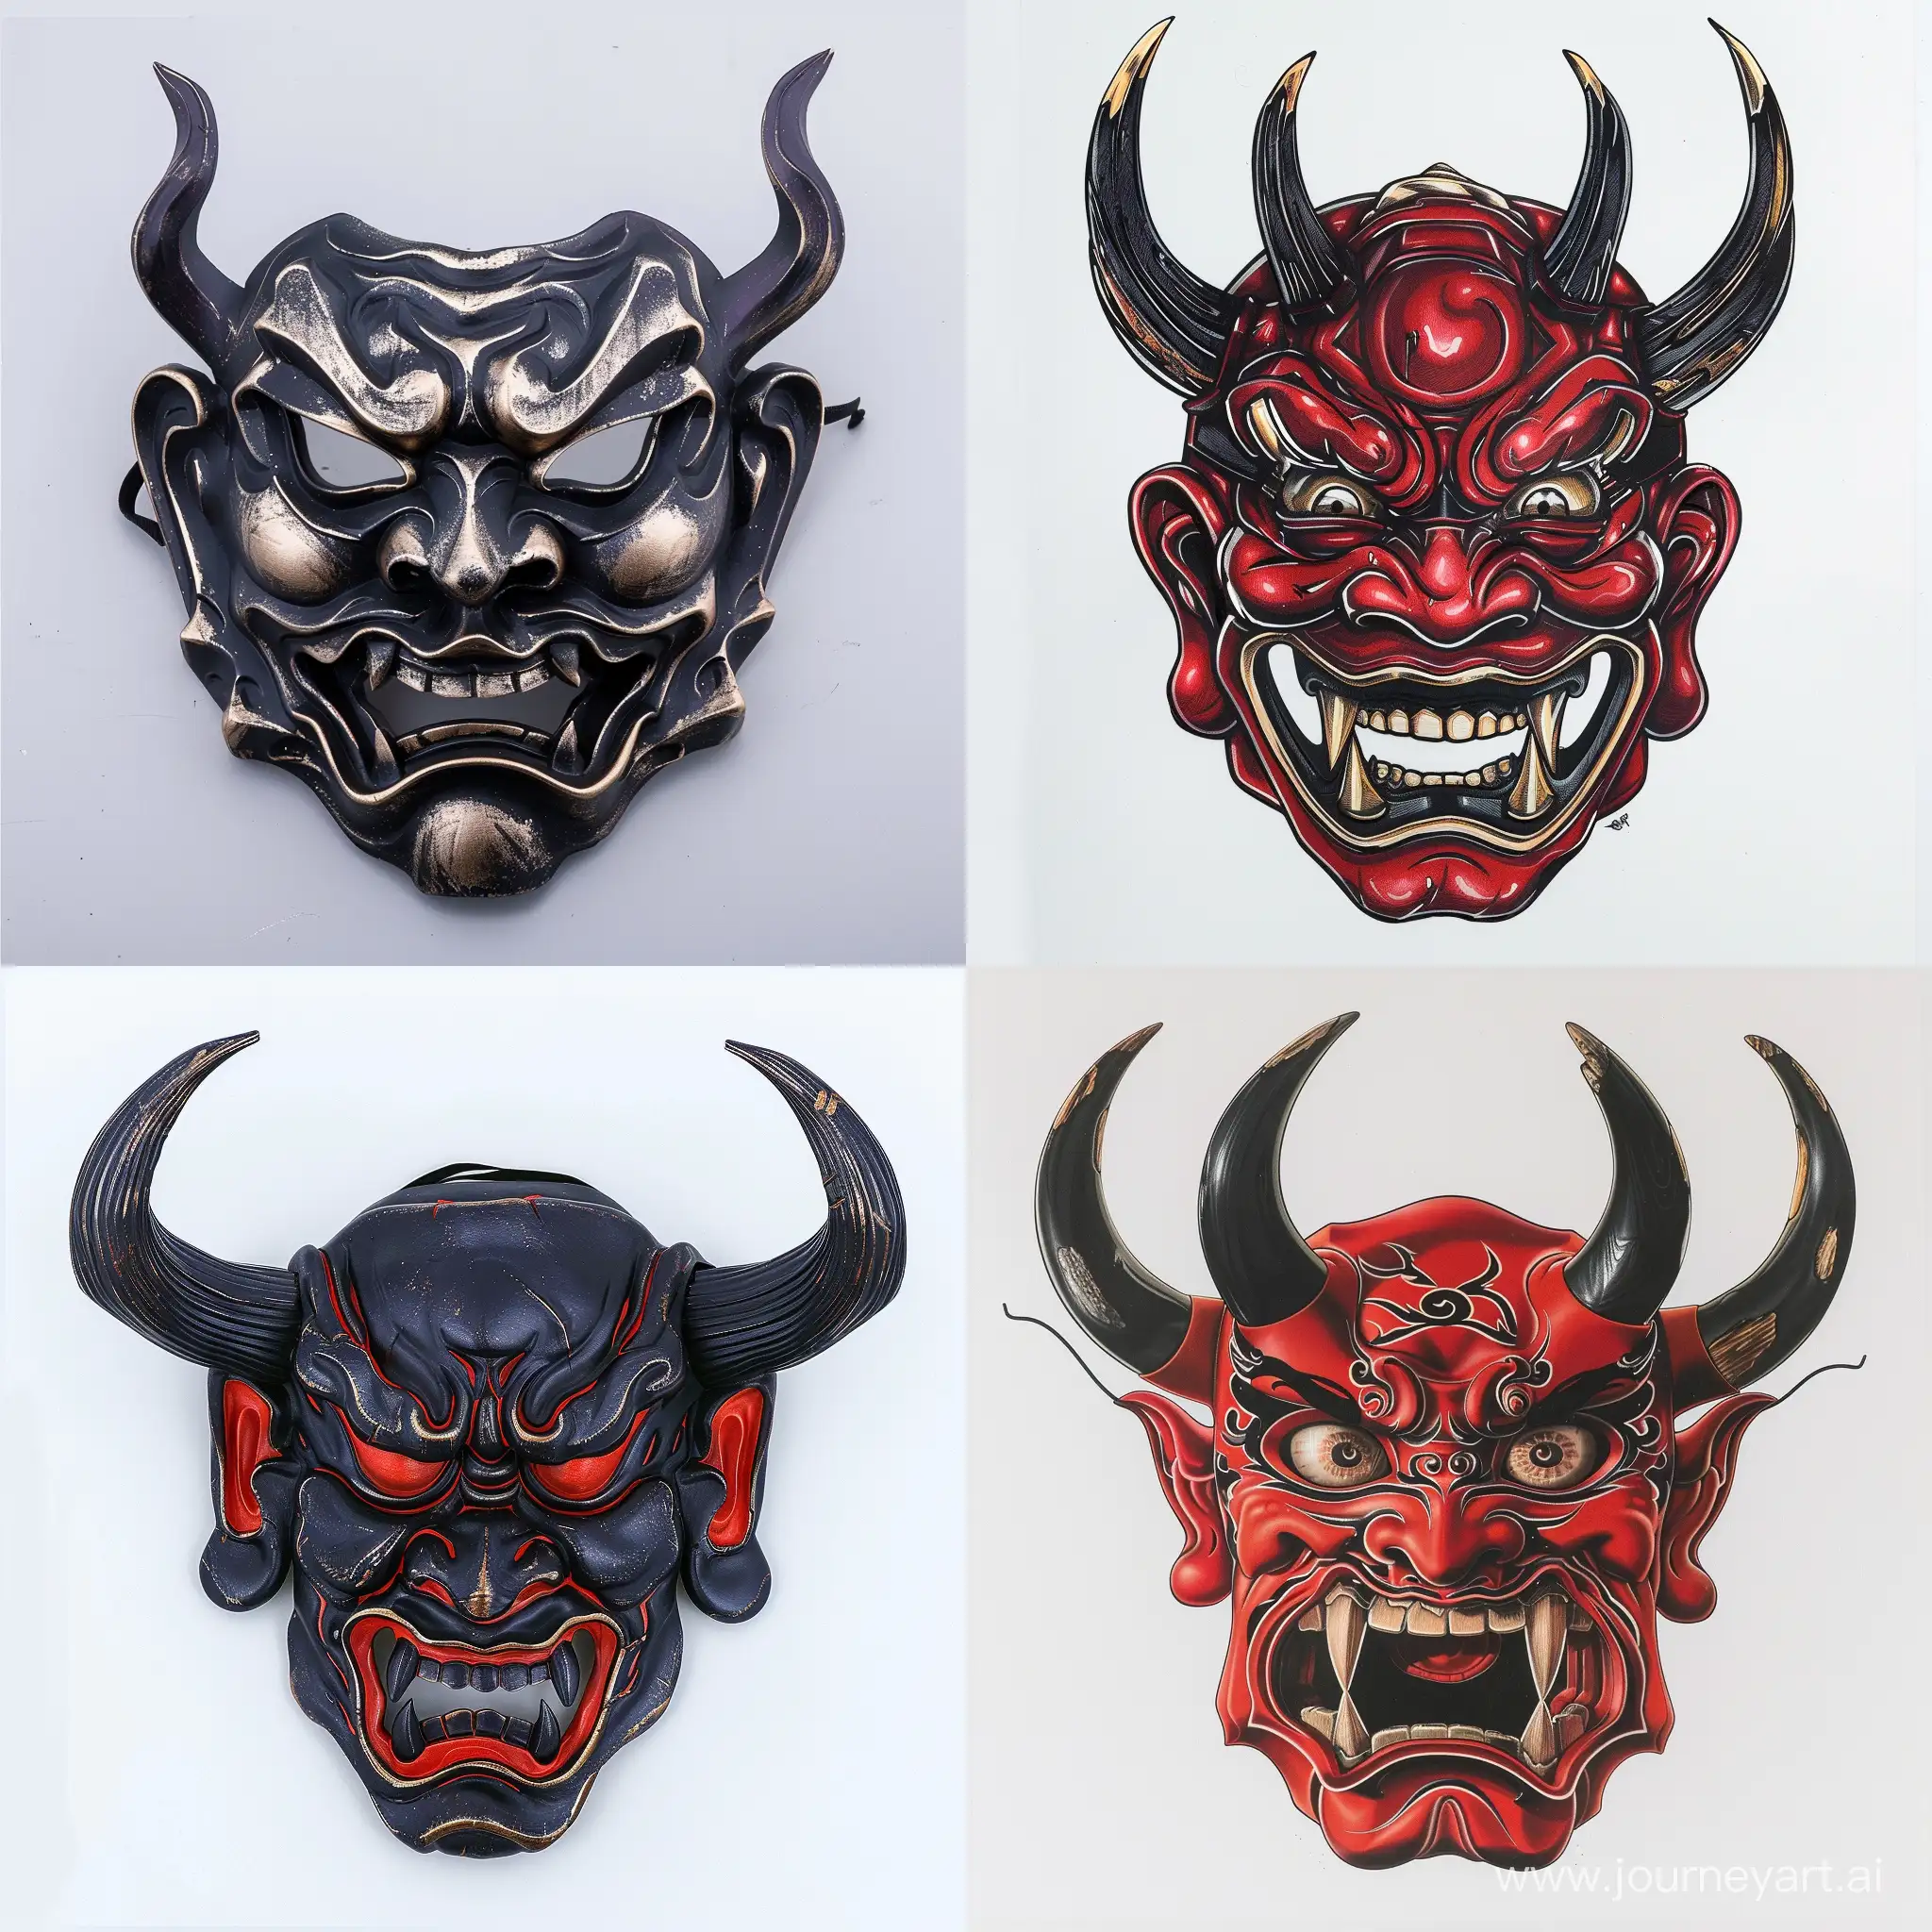 Humorous-Japanese-Demon-Mask-Art-on-White-Background